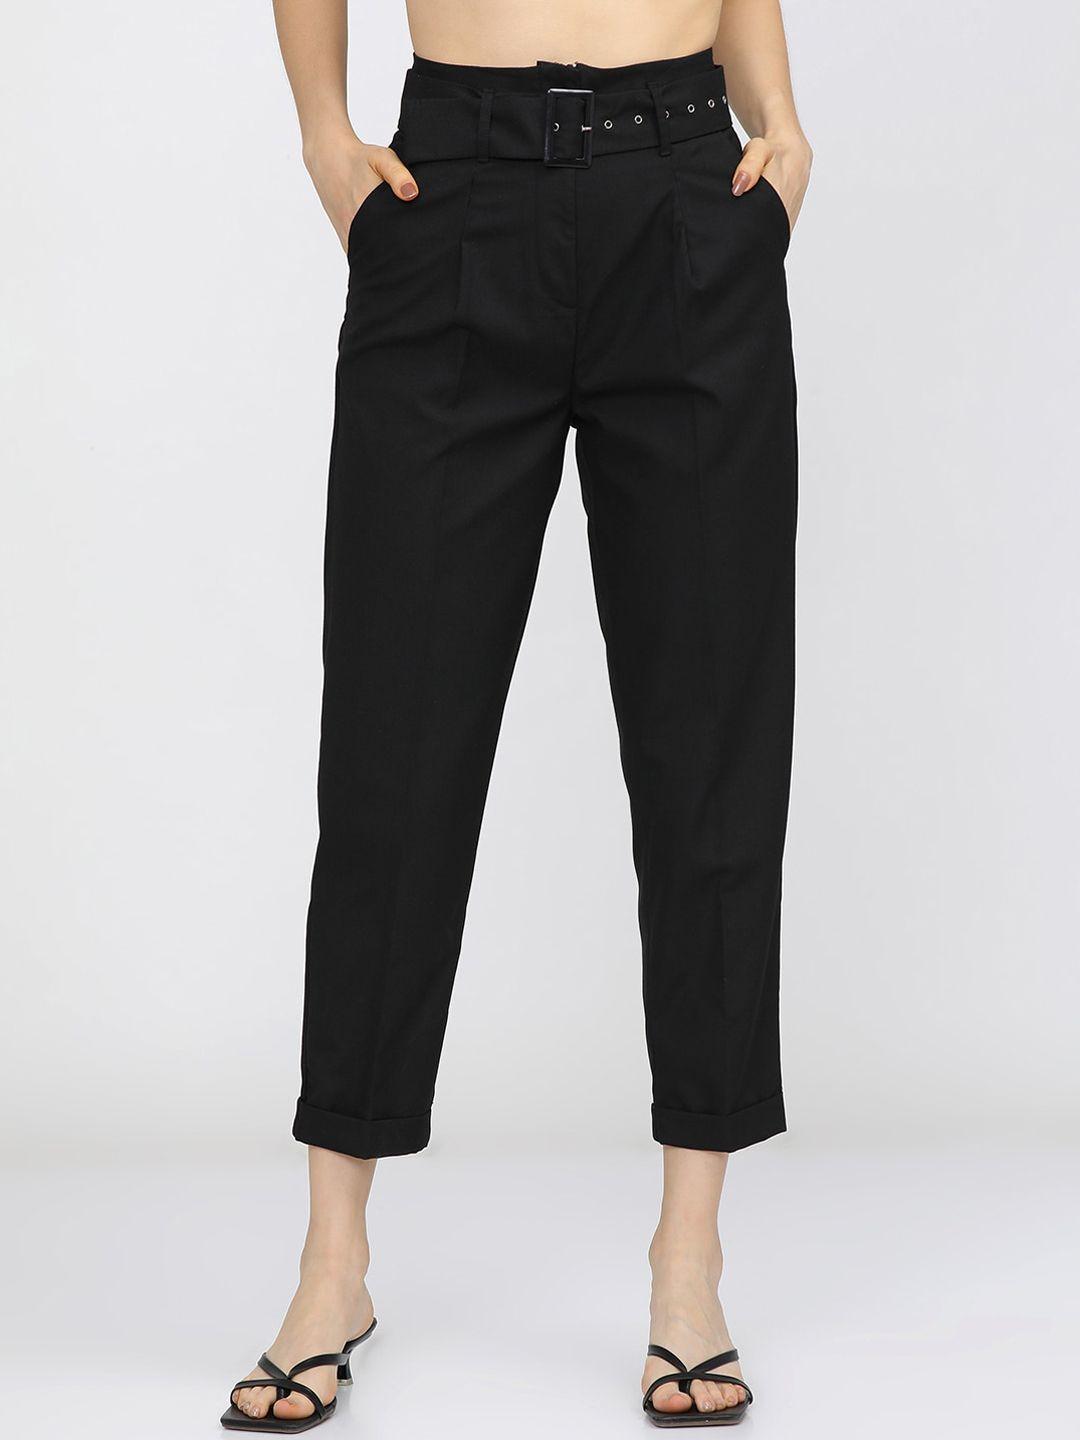 tokyo-talkies-women-black-slim-fit-pleated-trousers-with-belt